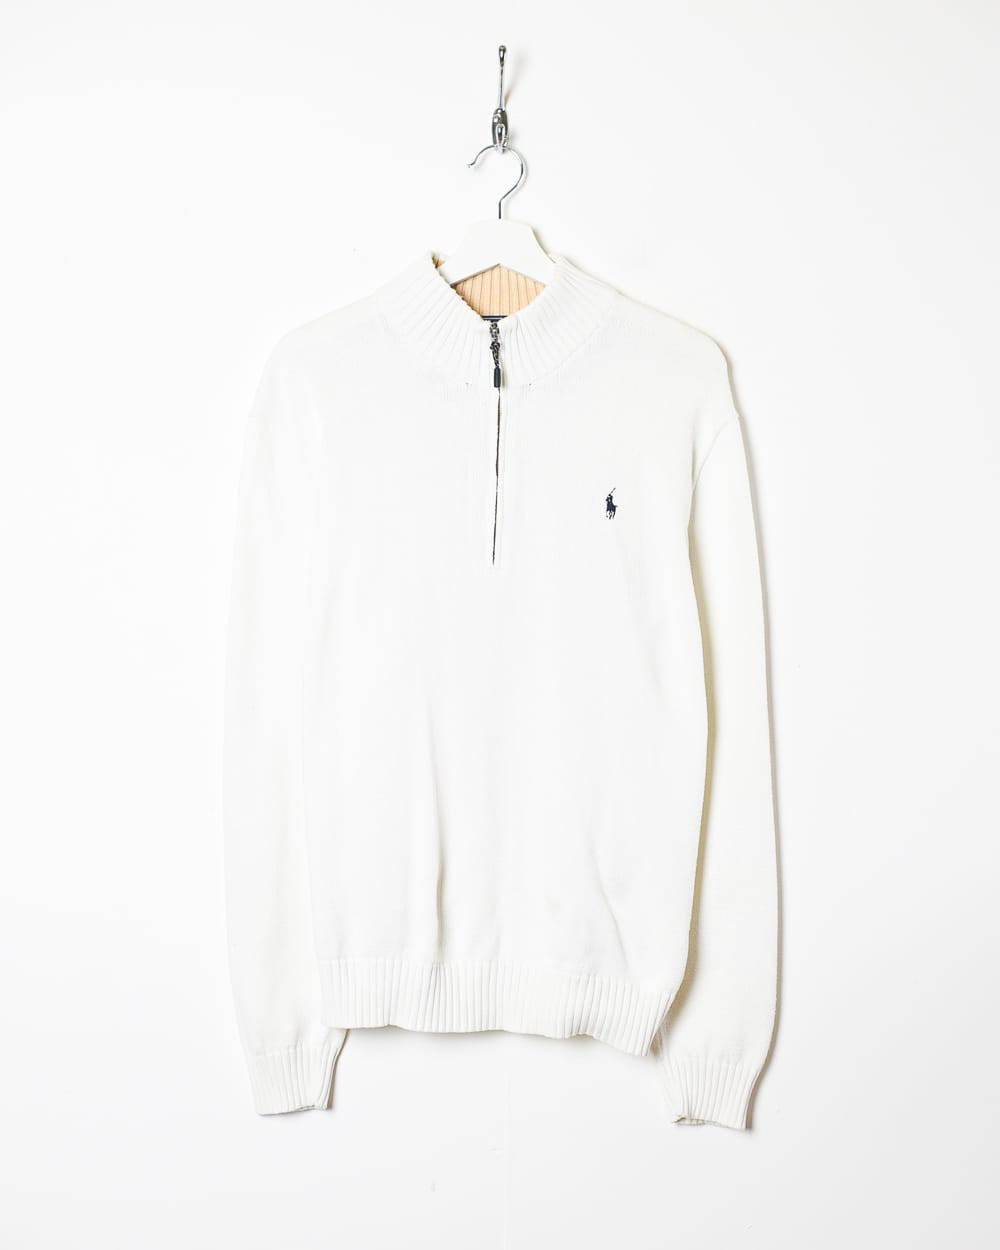 White Polo Ralph Lauren 1/4 Zip Sweatshirt - Large